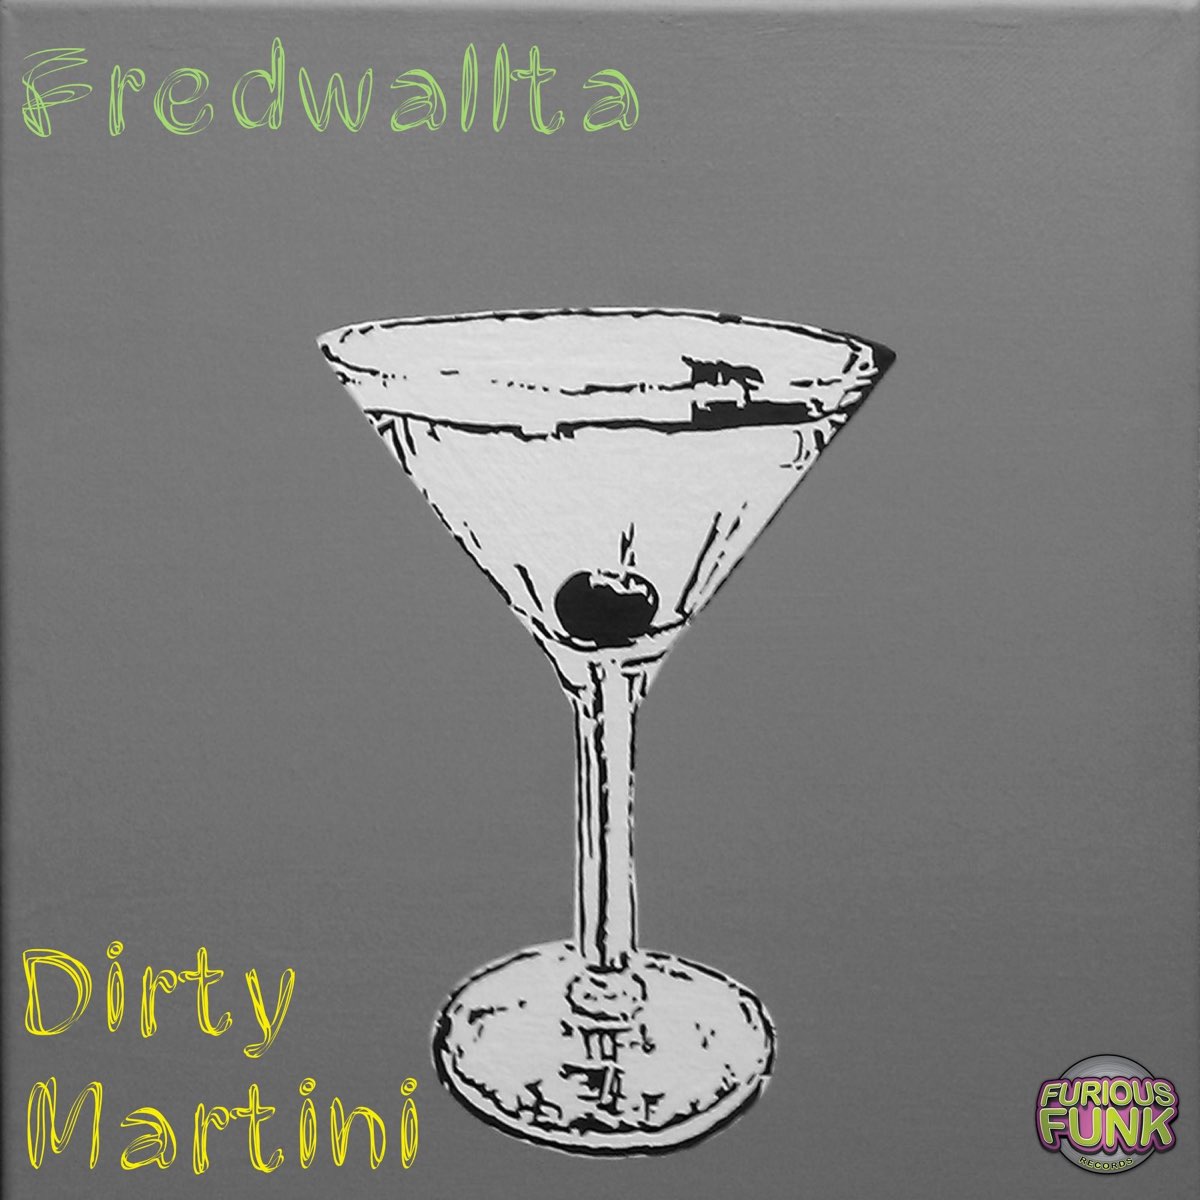 Dirty Martini - Single by FredWallta.